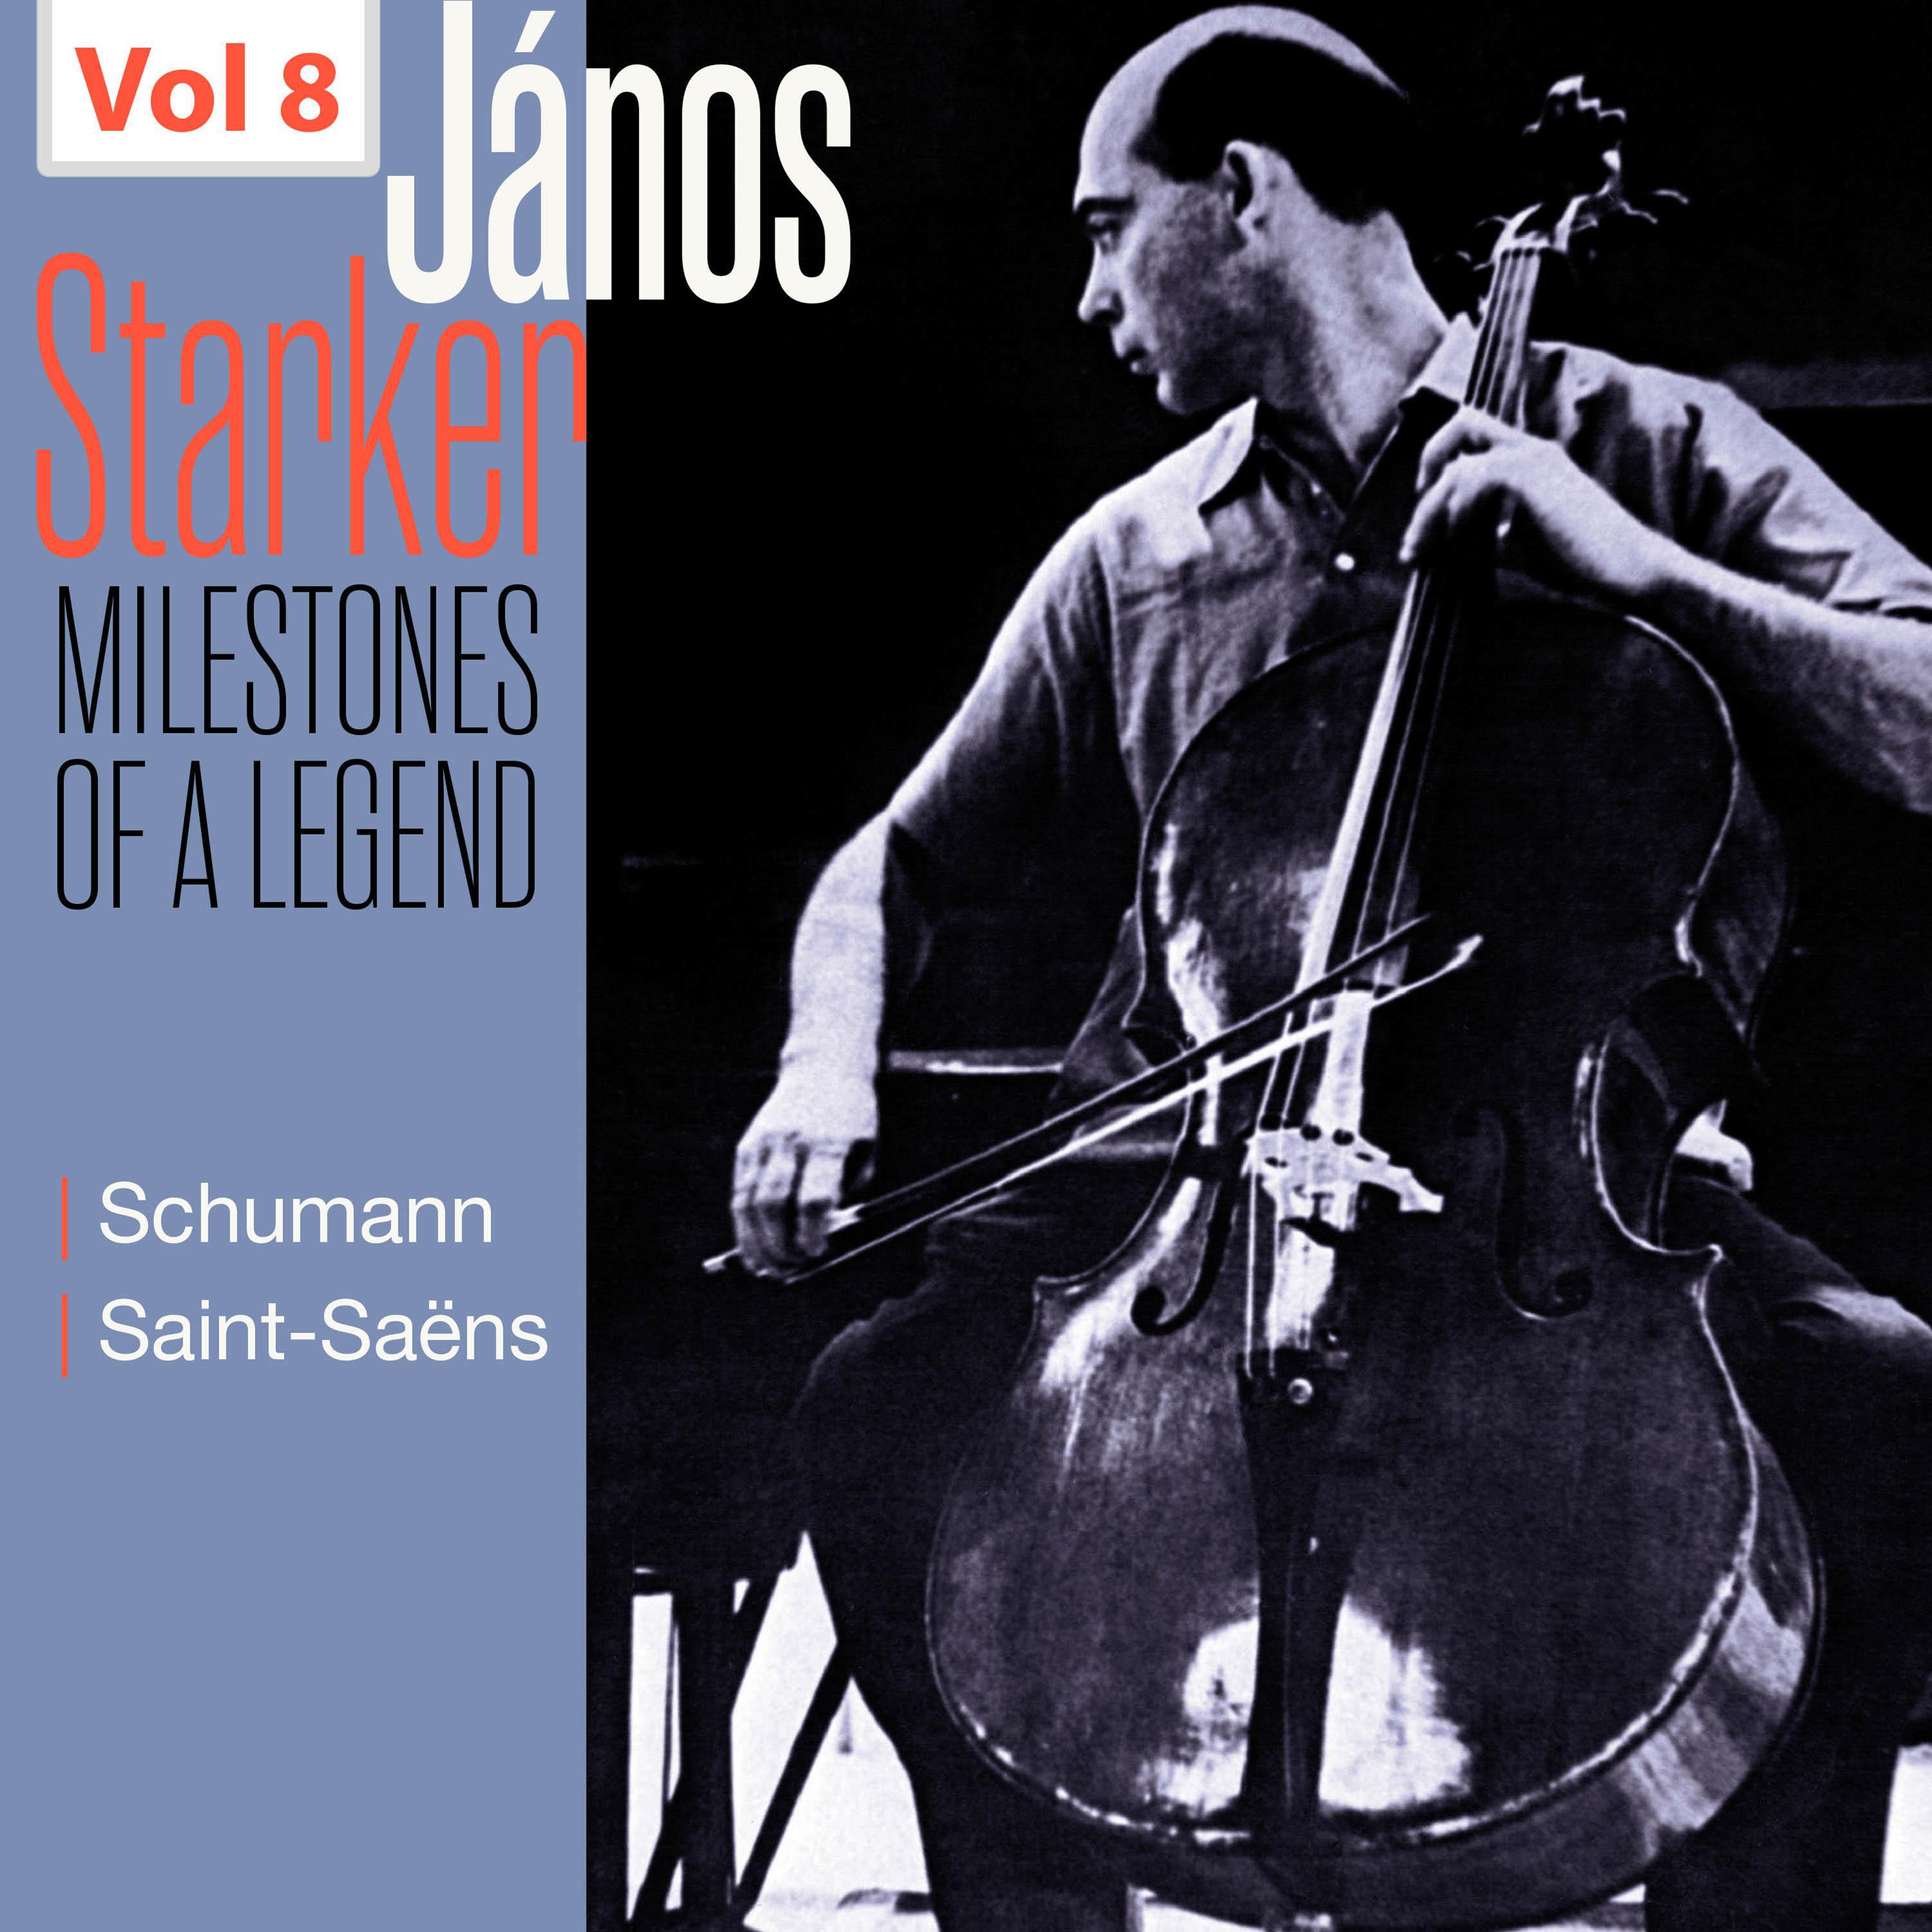 Milestones of a Legend - Janos Starker, Vol. 8